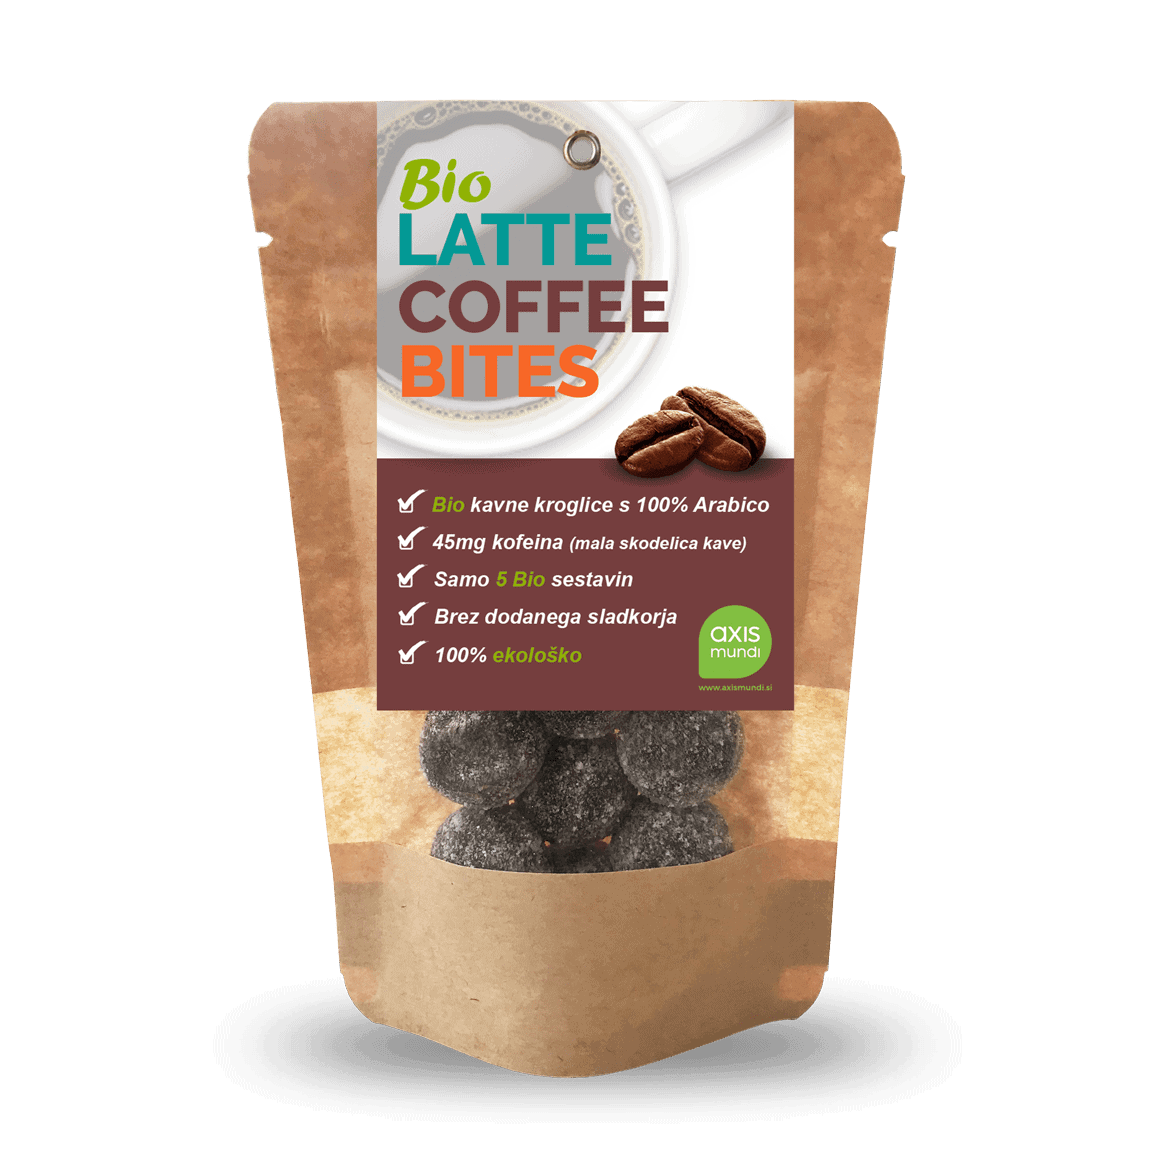 Healthy Bites Bio latte coffee bites